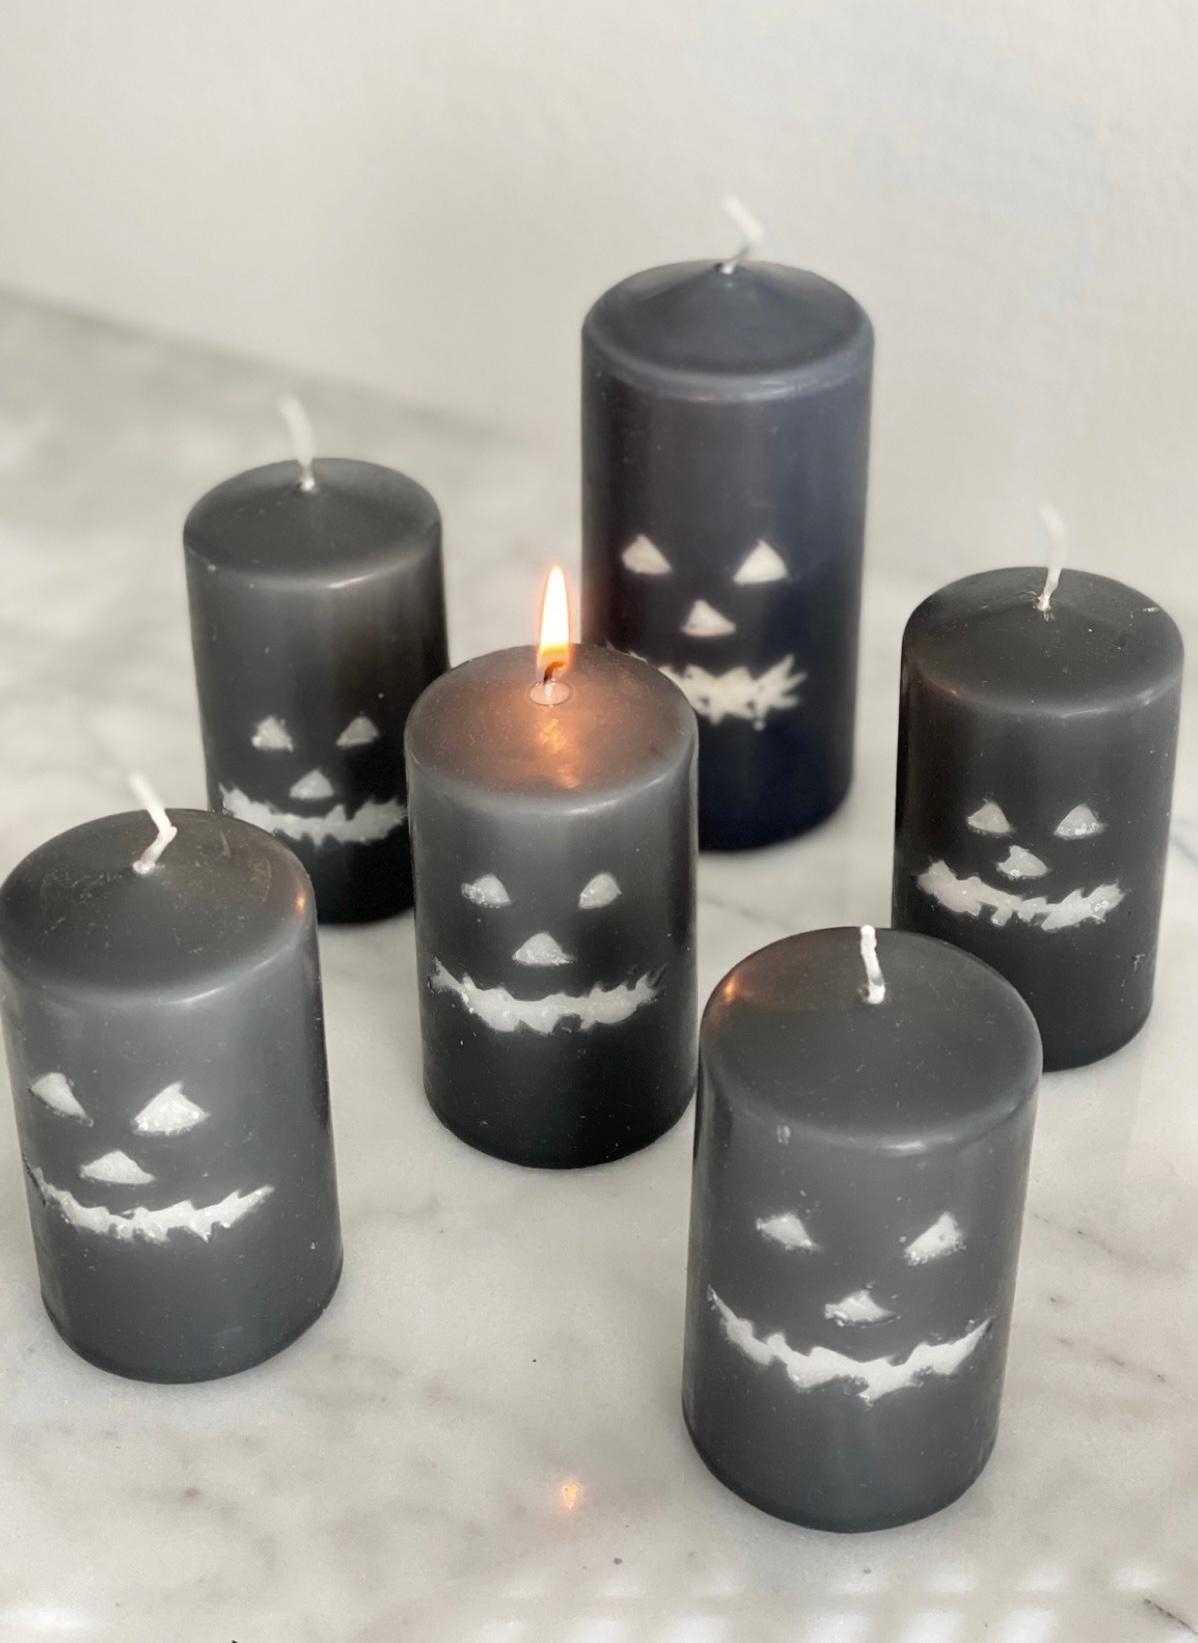 Easy Last Minute DIY Halloween Deko geschnitzte Kerzen 🕯️👻 #DIY #Deko #Halloweendeko #Halloween #Kerzen #happyhalloween !